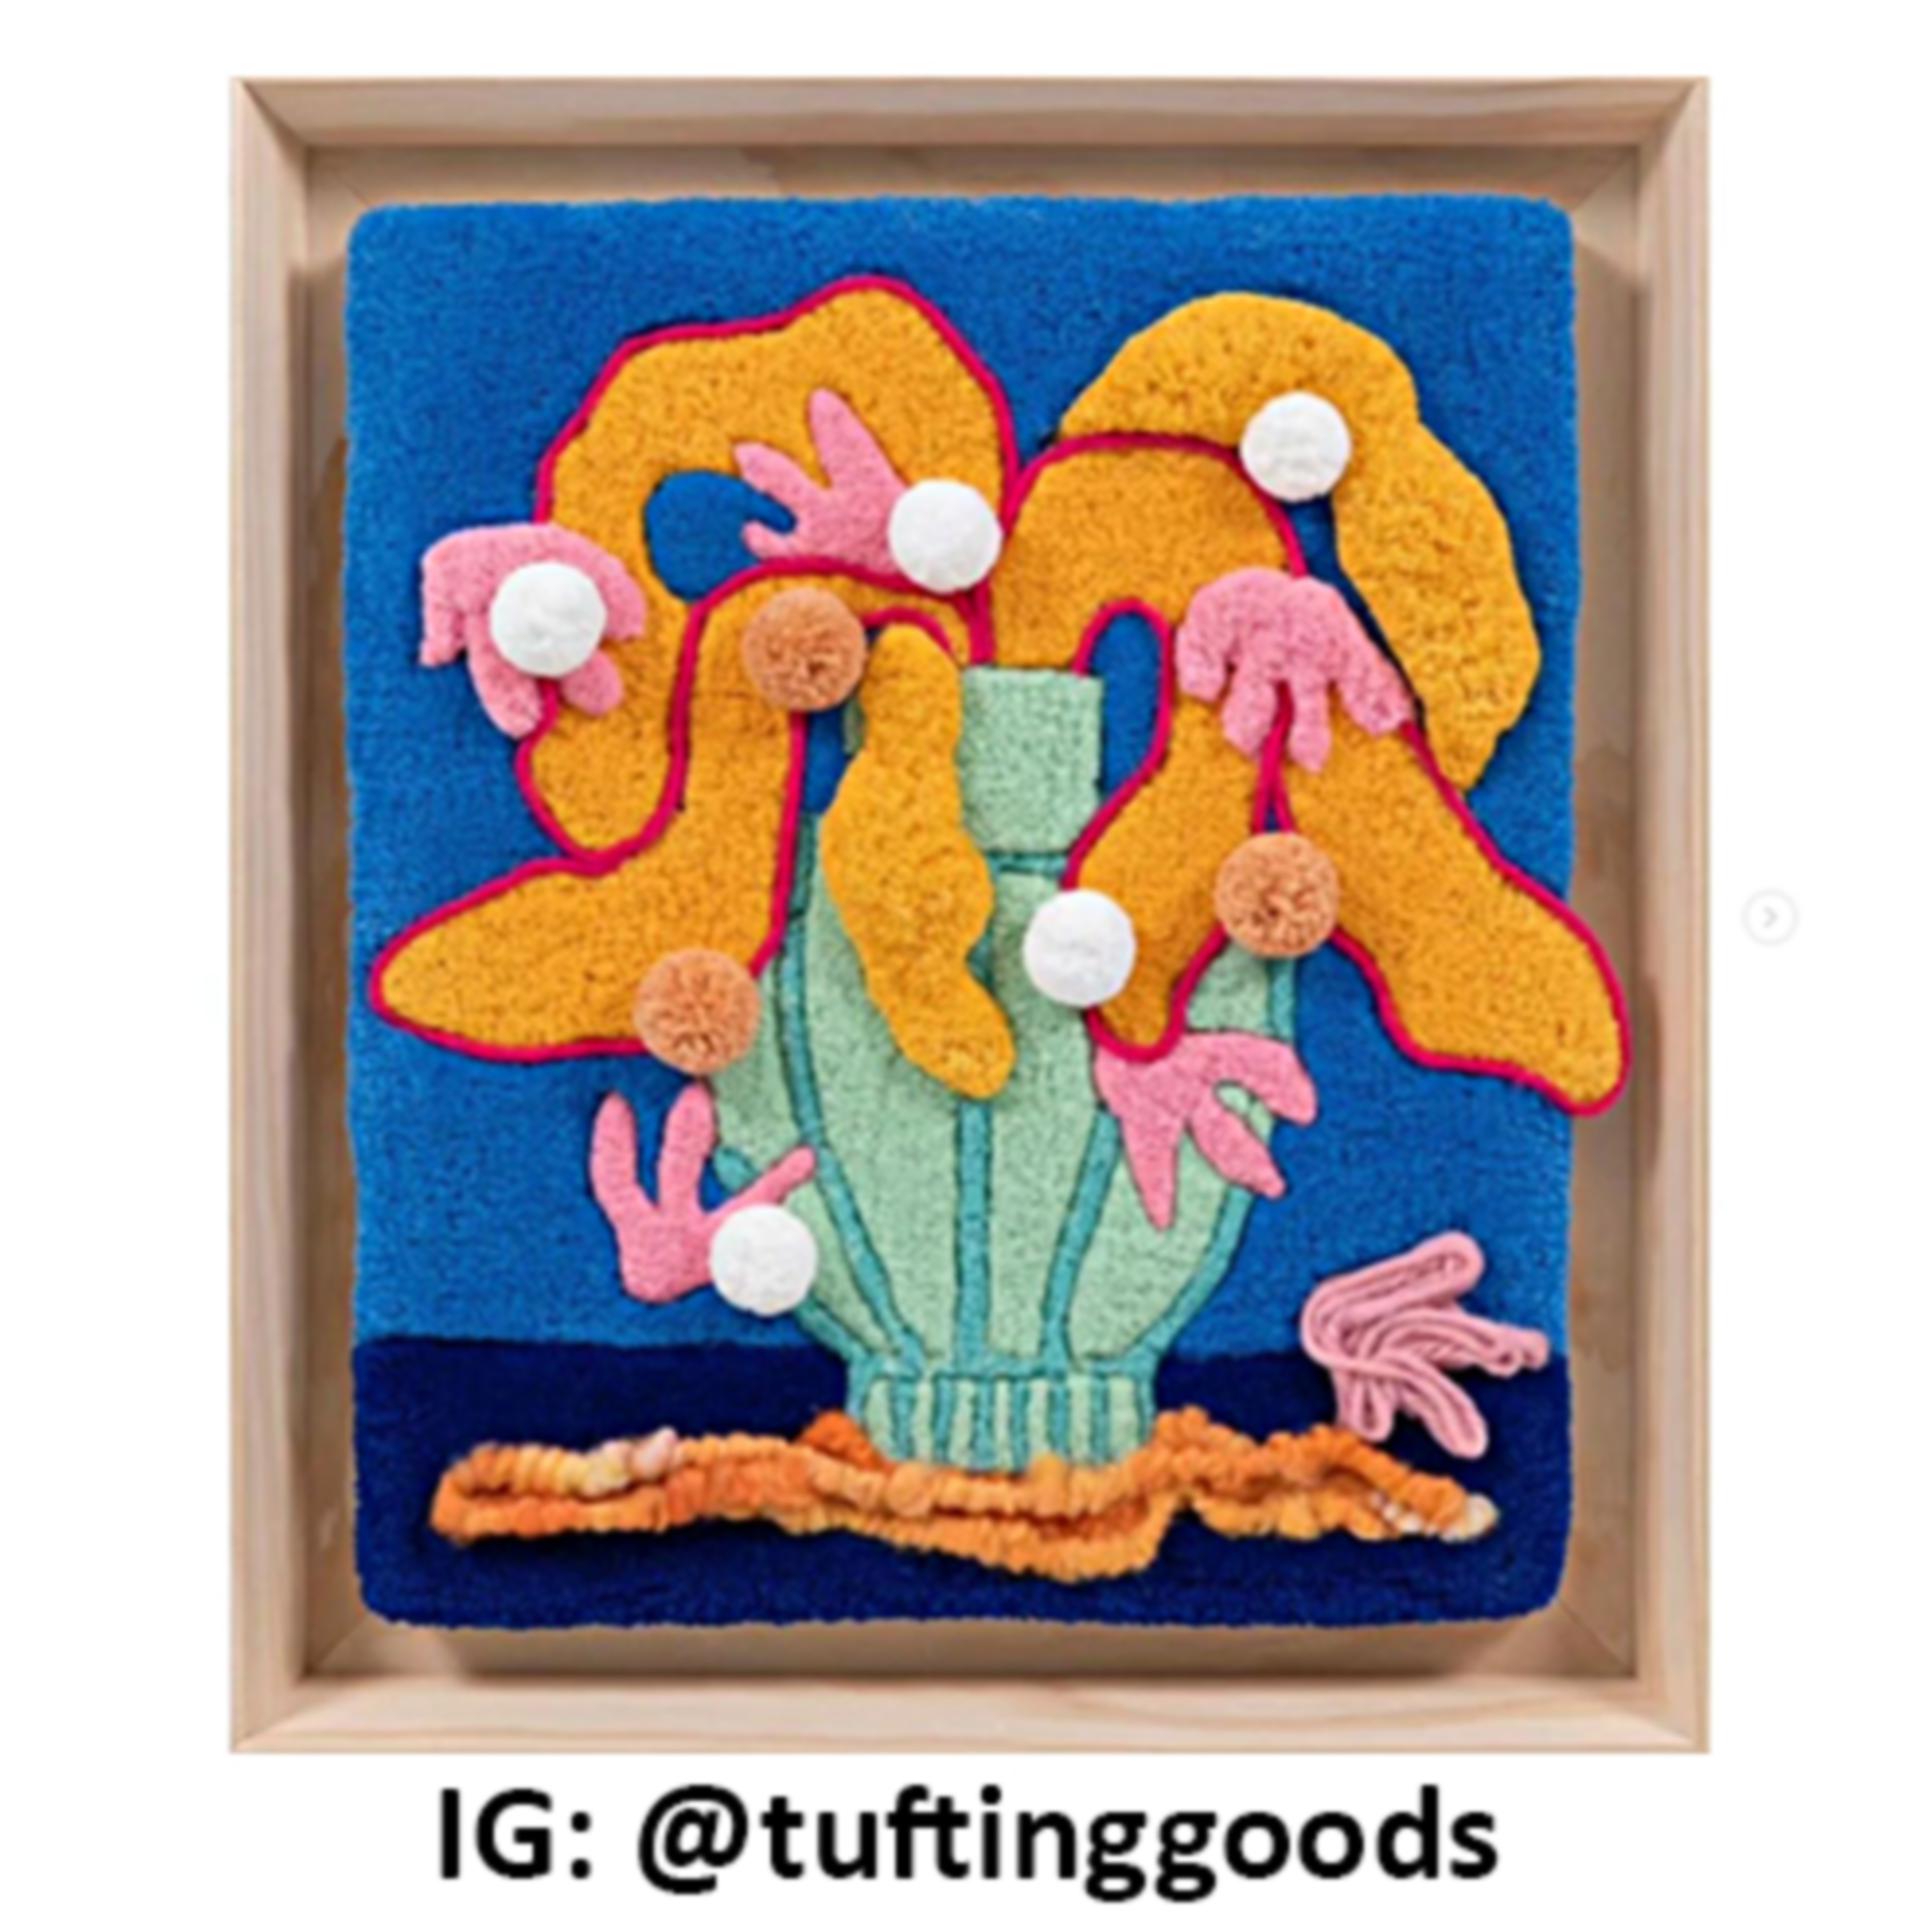 artista del tufting, crea tappeti artistici, in instagram tuftinggoods - Consigliati d iido, Roma